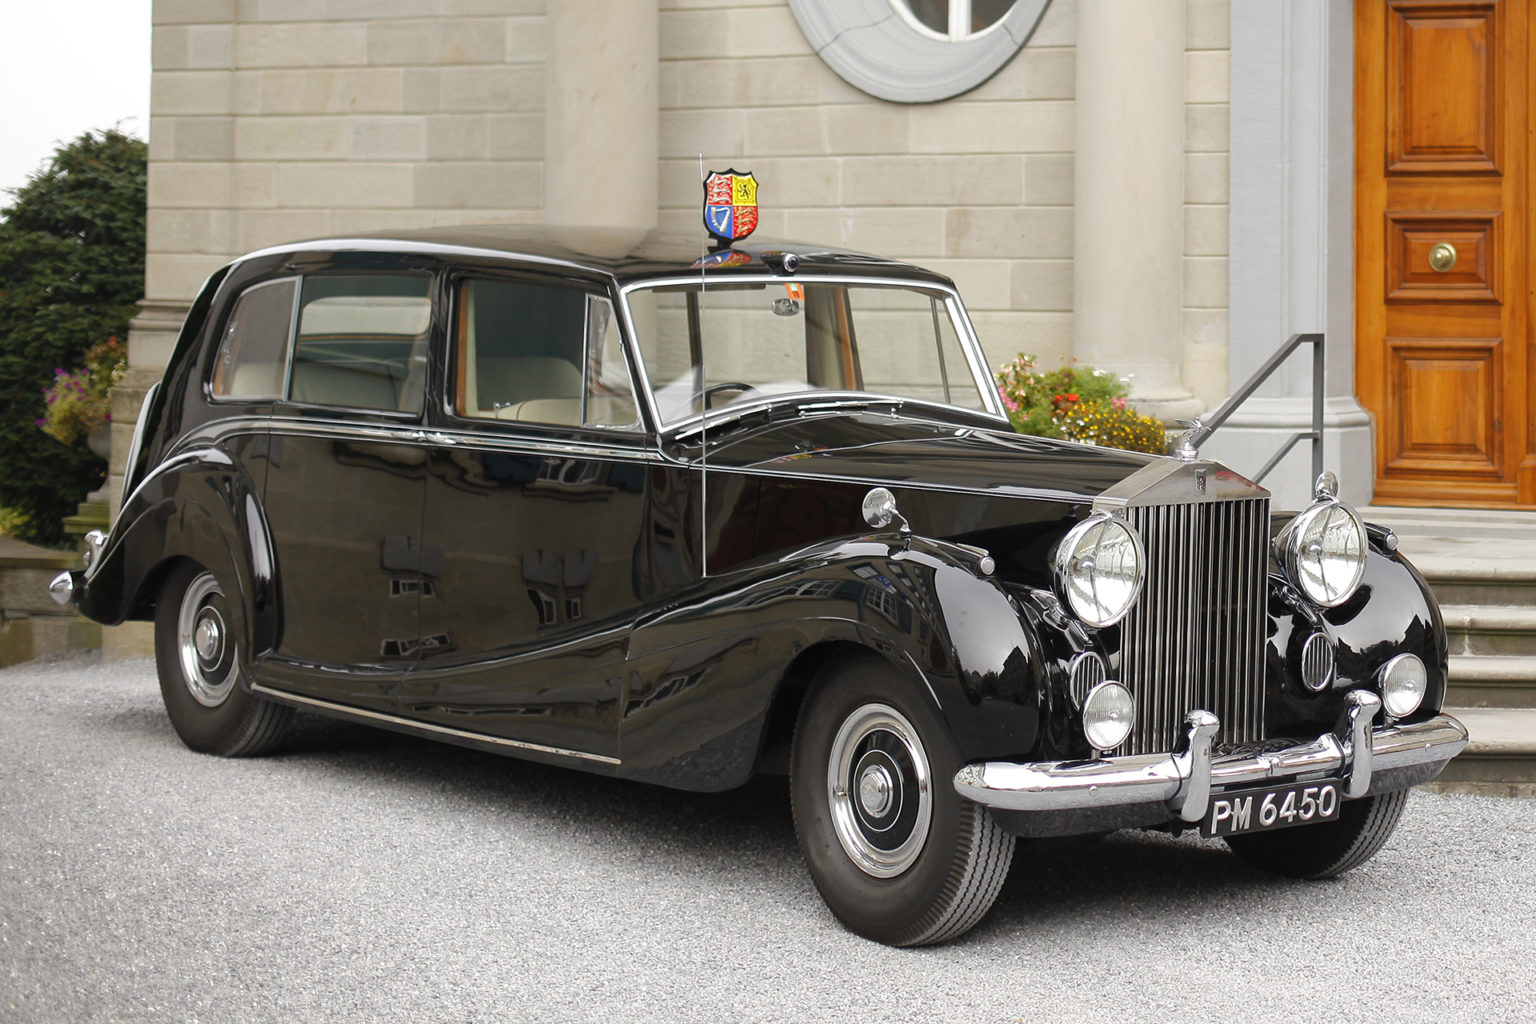 10-1954-Rolls-Royce-Phantom-IV-Limousine-Princess-Margaret-1536x1024